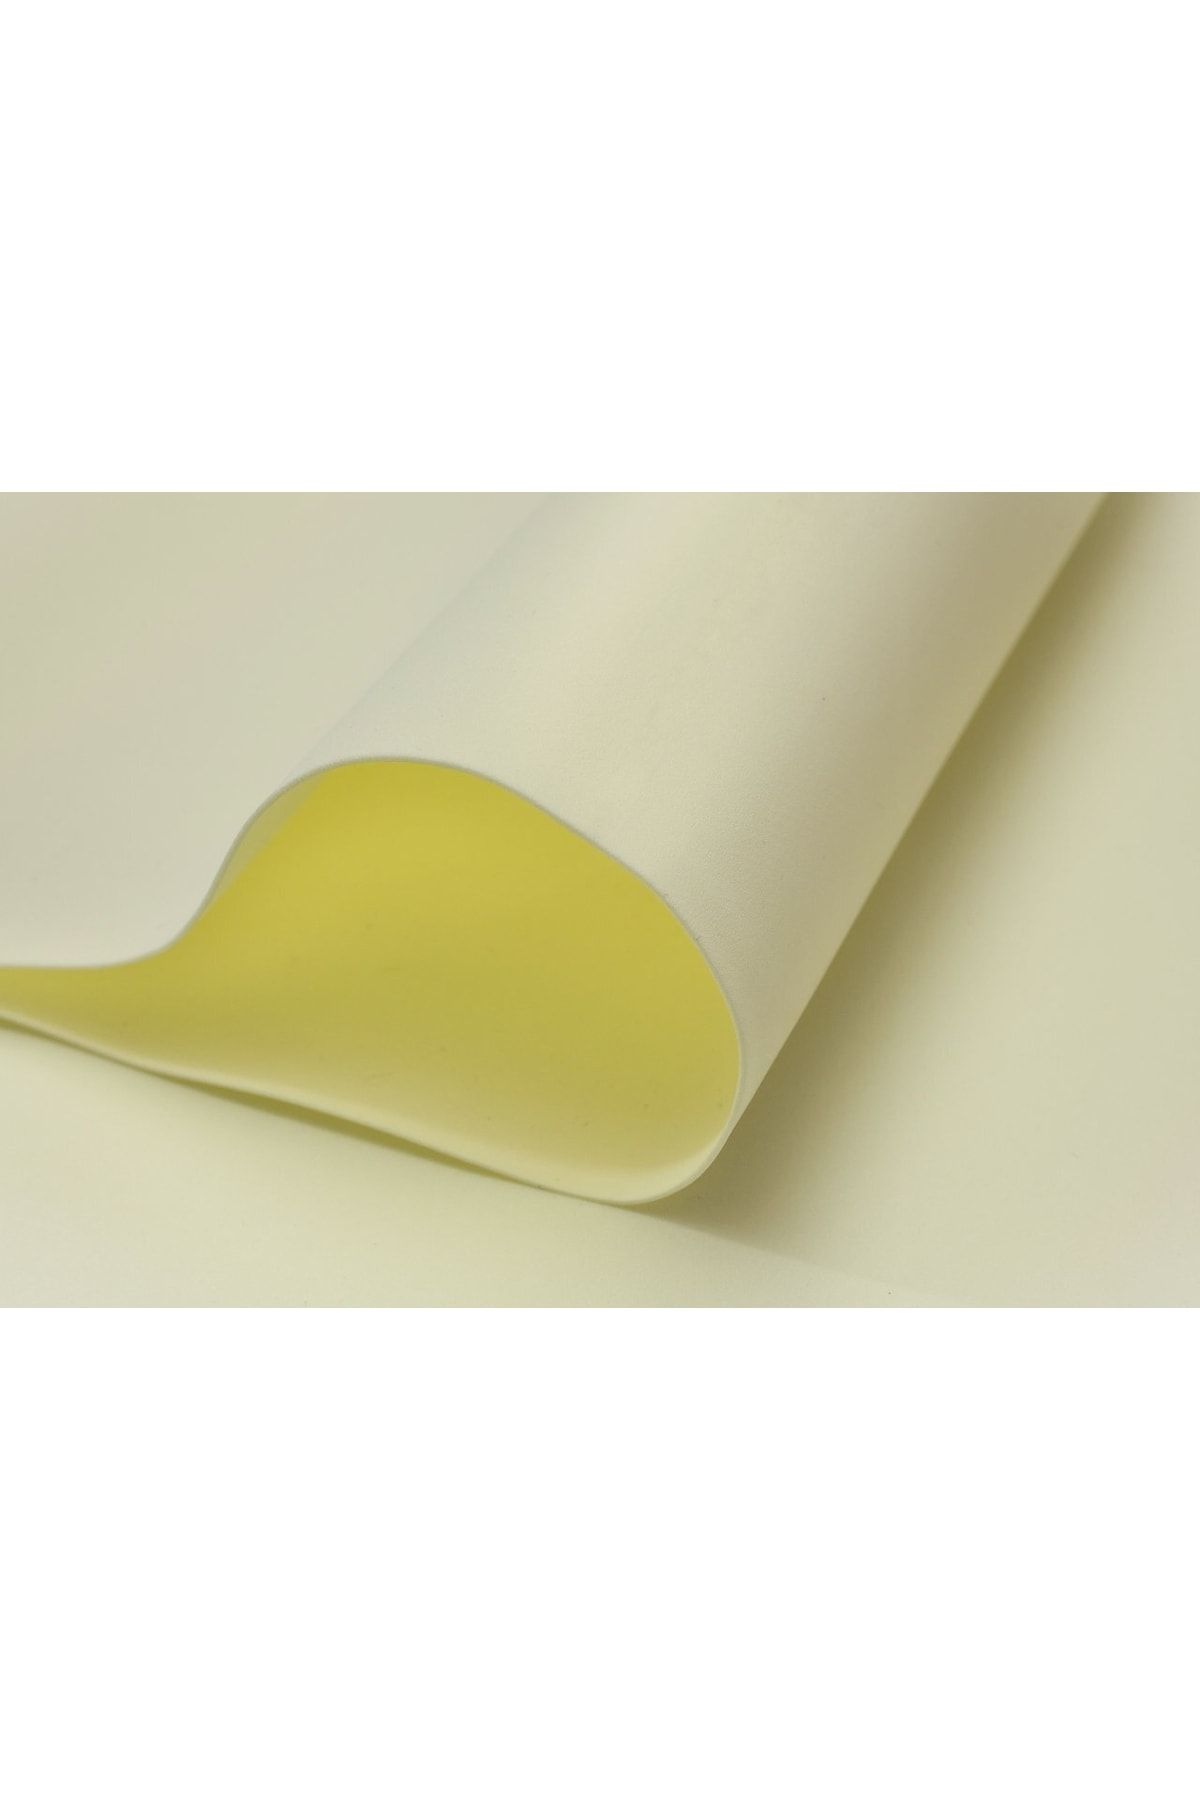 roco paper Eva (izolon) 0.8 Mm. - Ivory No:102